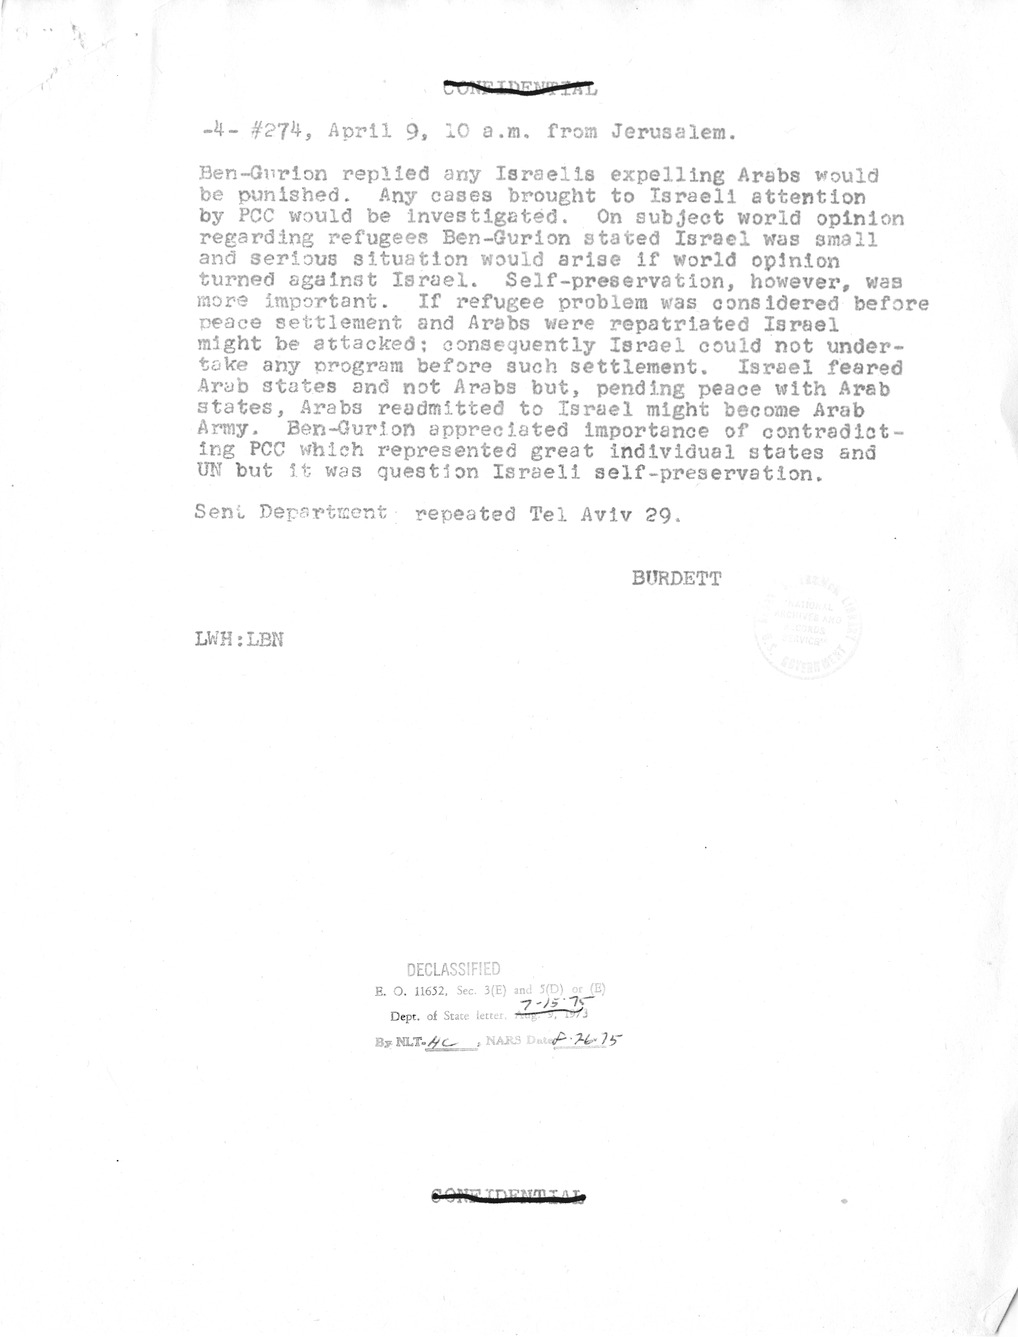 Telegram from William C. Burdett, Jr., to Secretary of State Dean Acheson